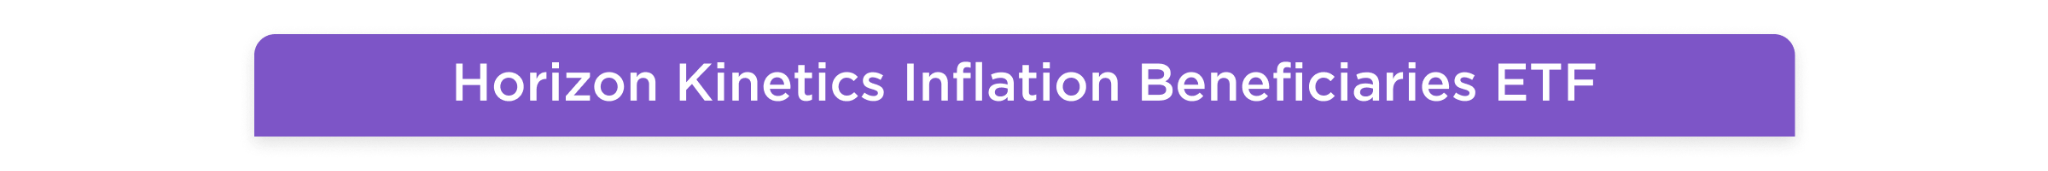 horizon-kinetics-inflation-beneficiaries